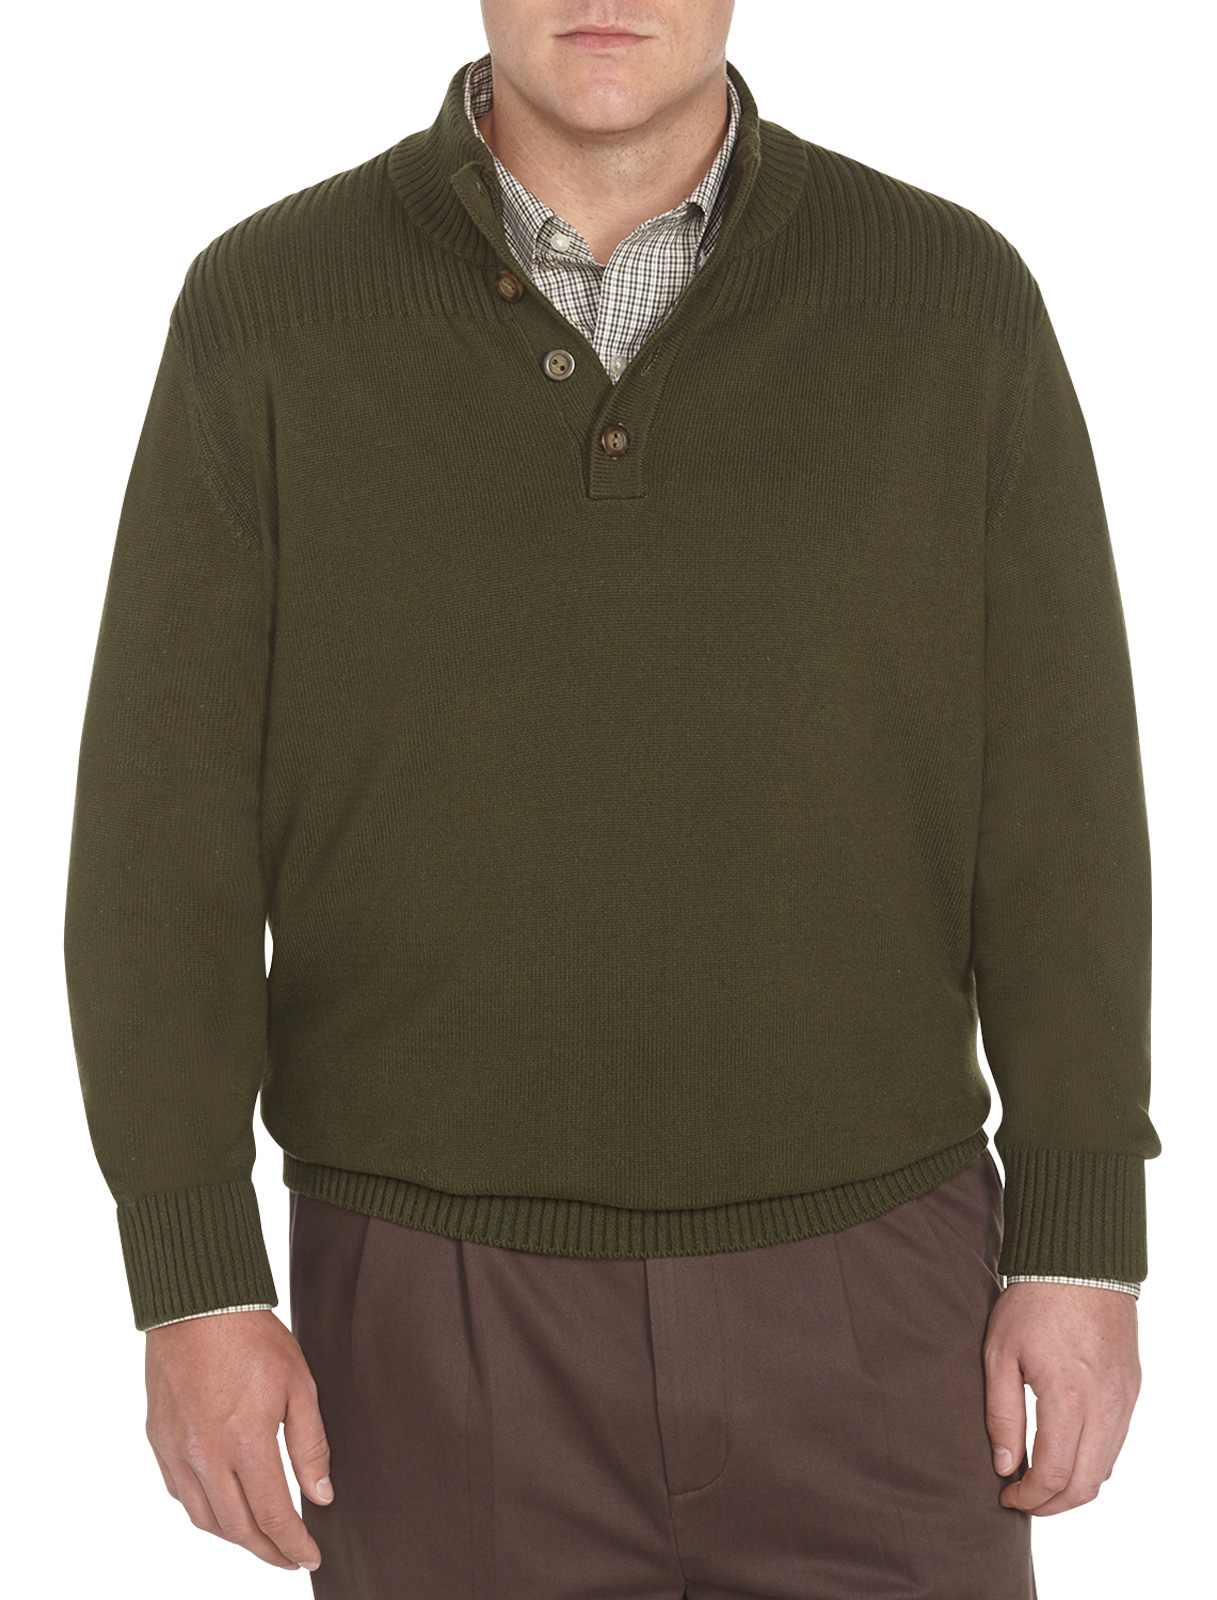 Oak Hill Men's Big and Tall Button Mockneck Sweater